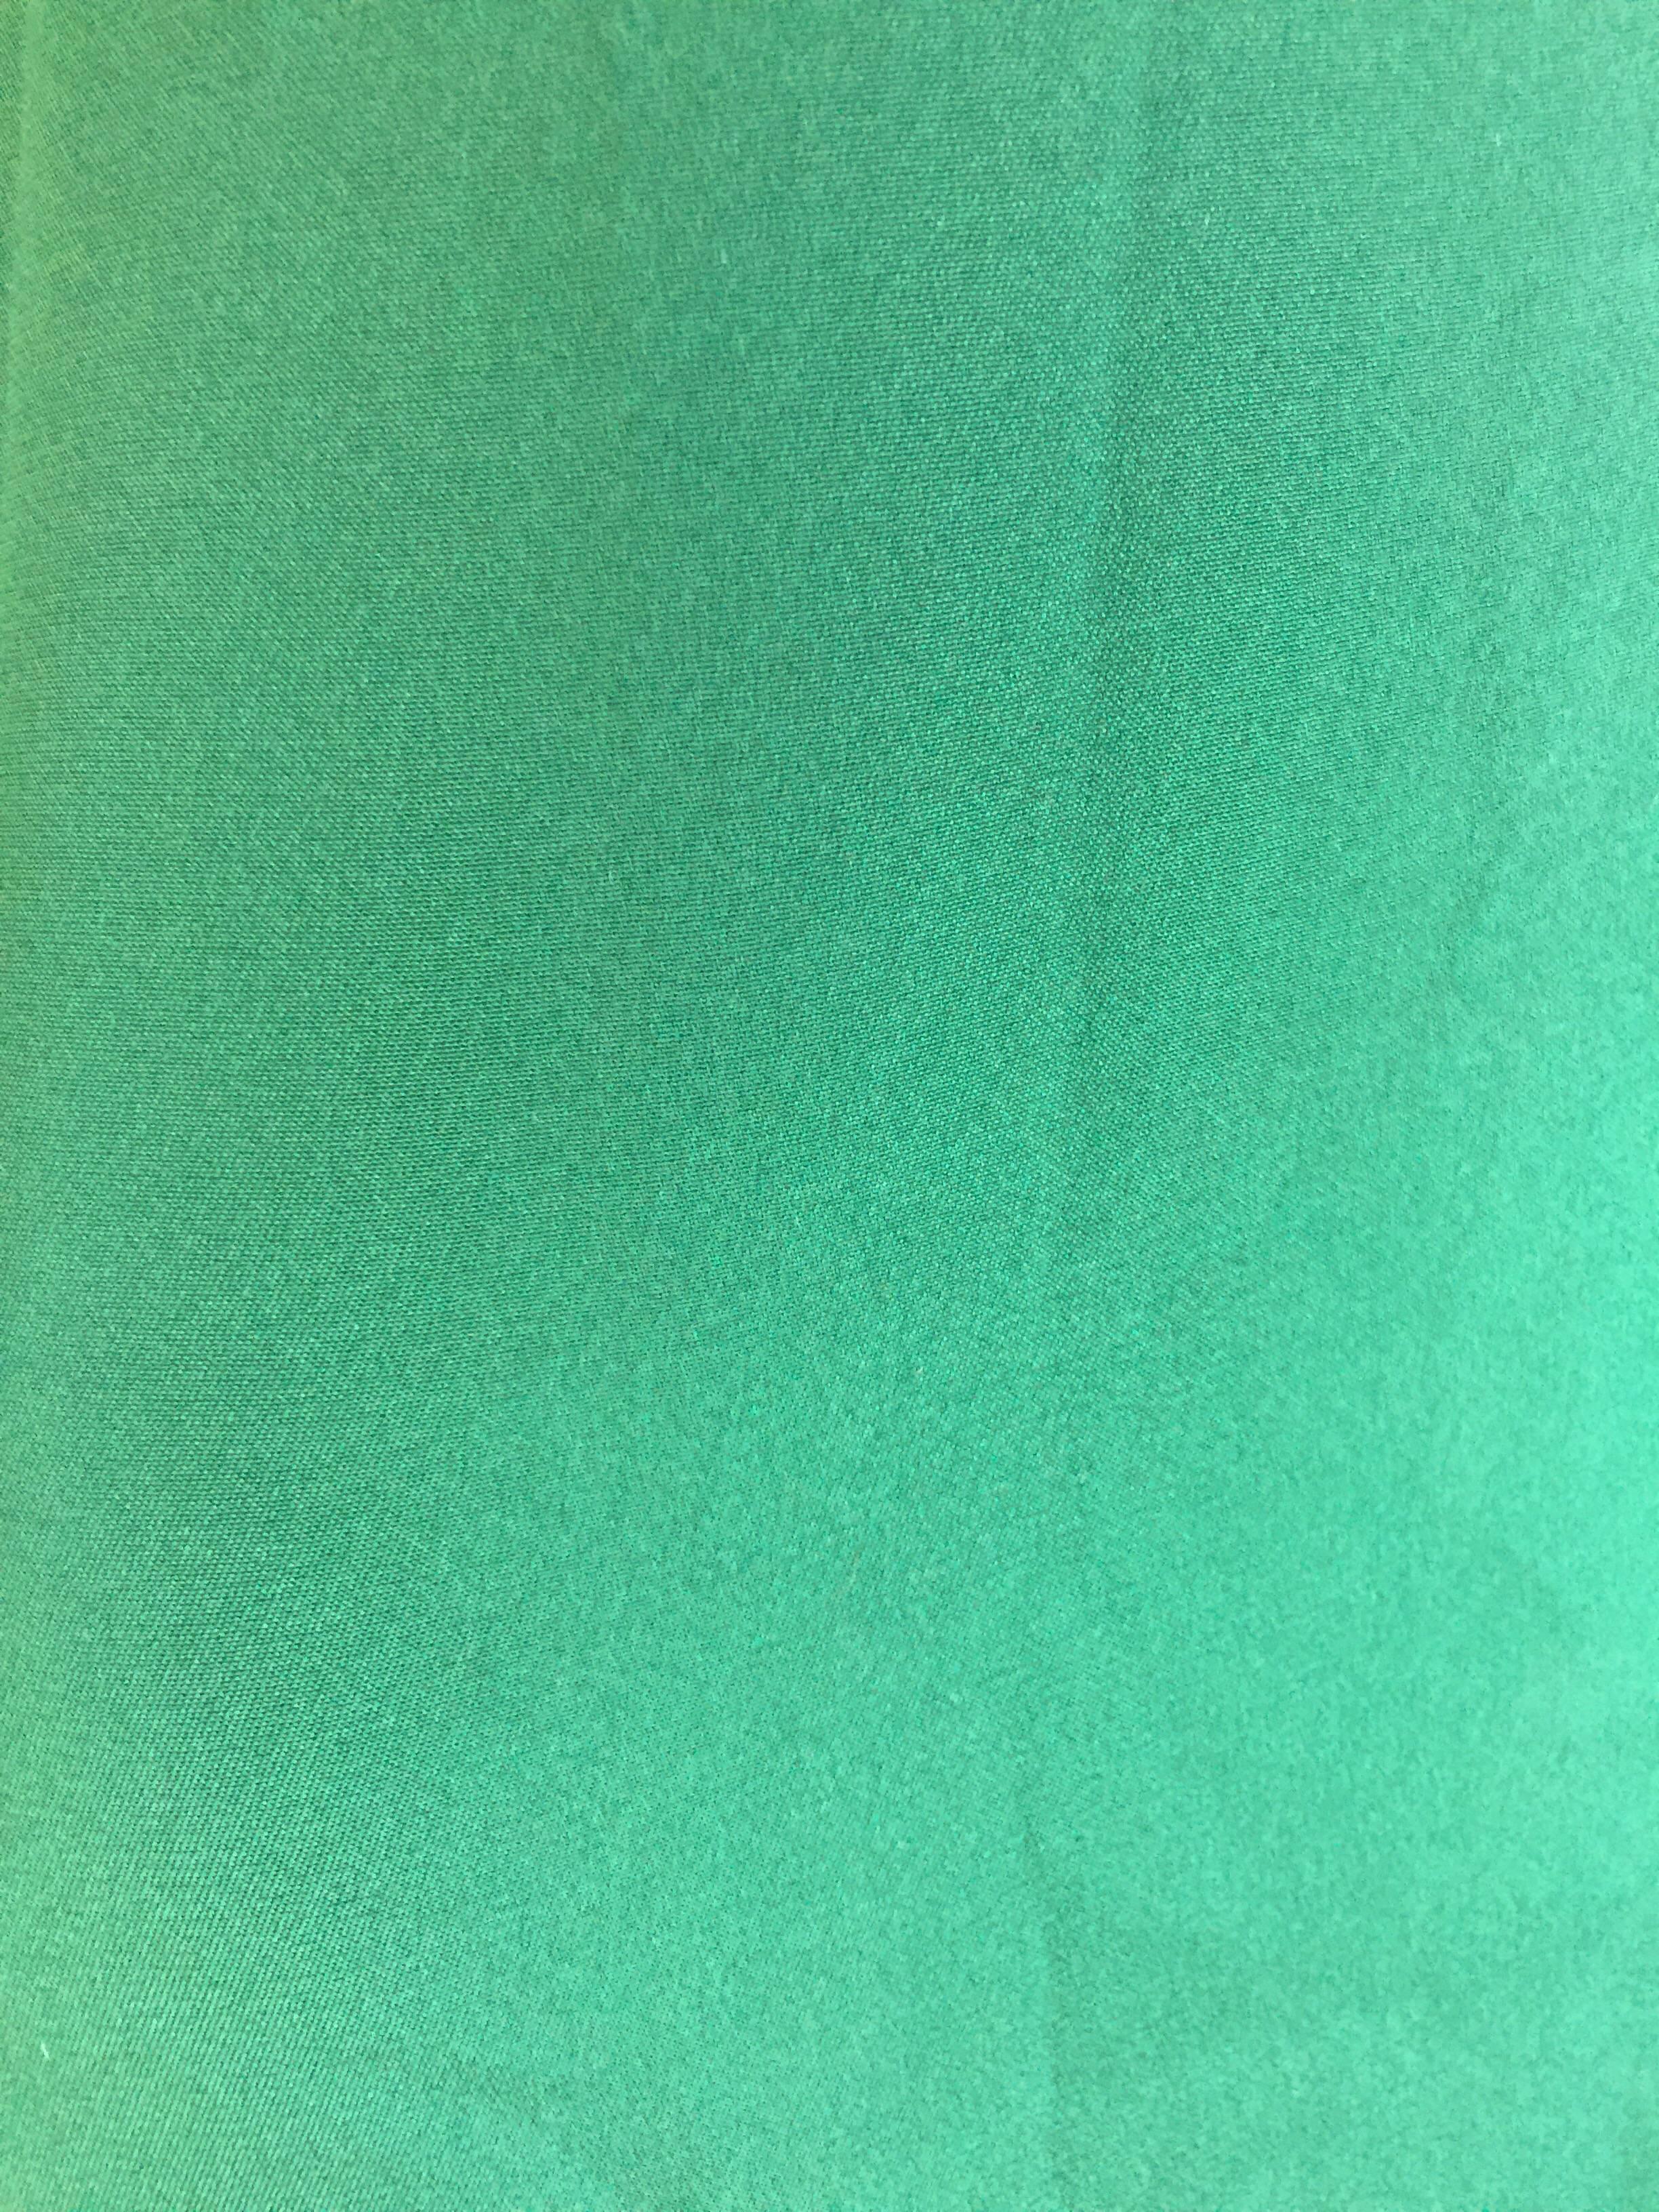 Oscar de la Renta velvet empire waist green silk gown  In Good Condition For Sale In New York, NY